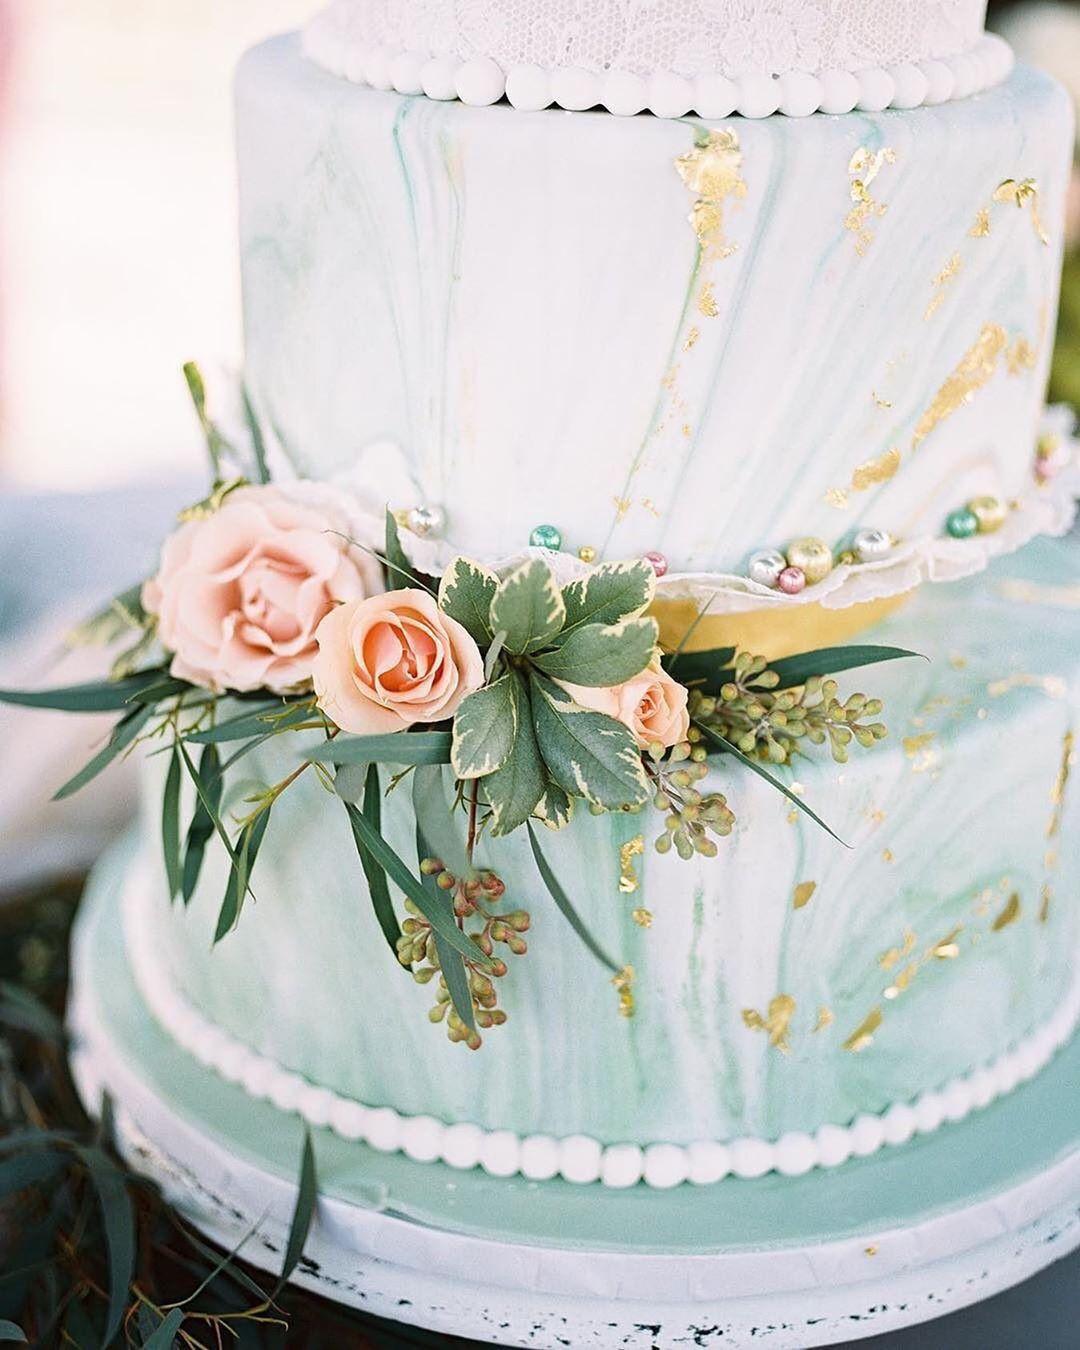 White Wedding Cake Image & Photo (Free Trial) | Bigstock